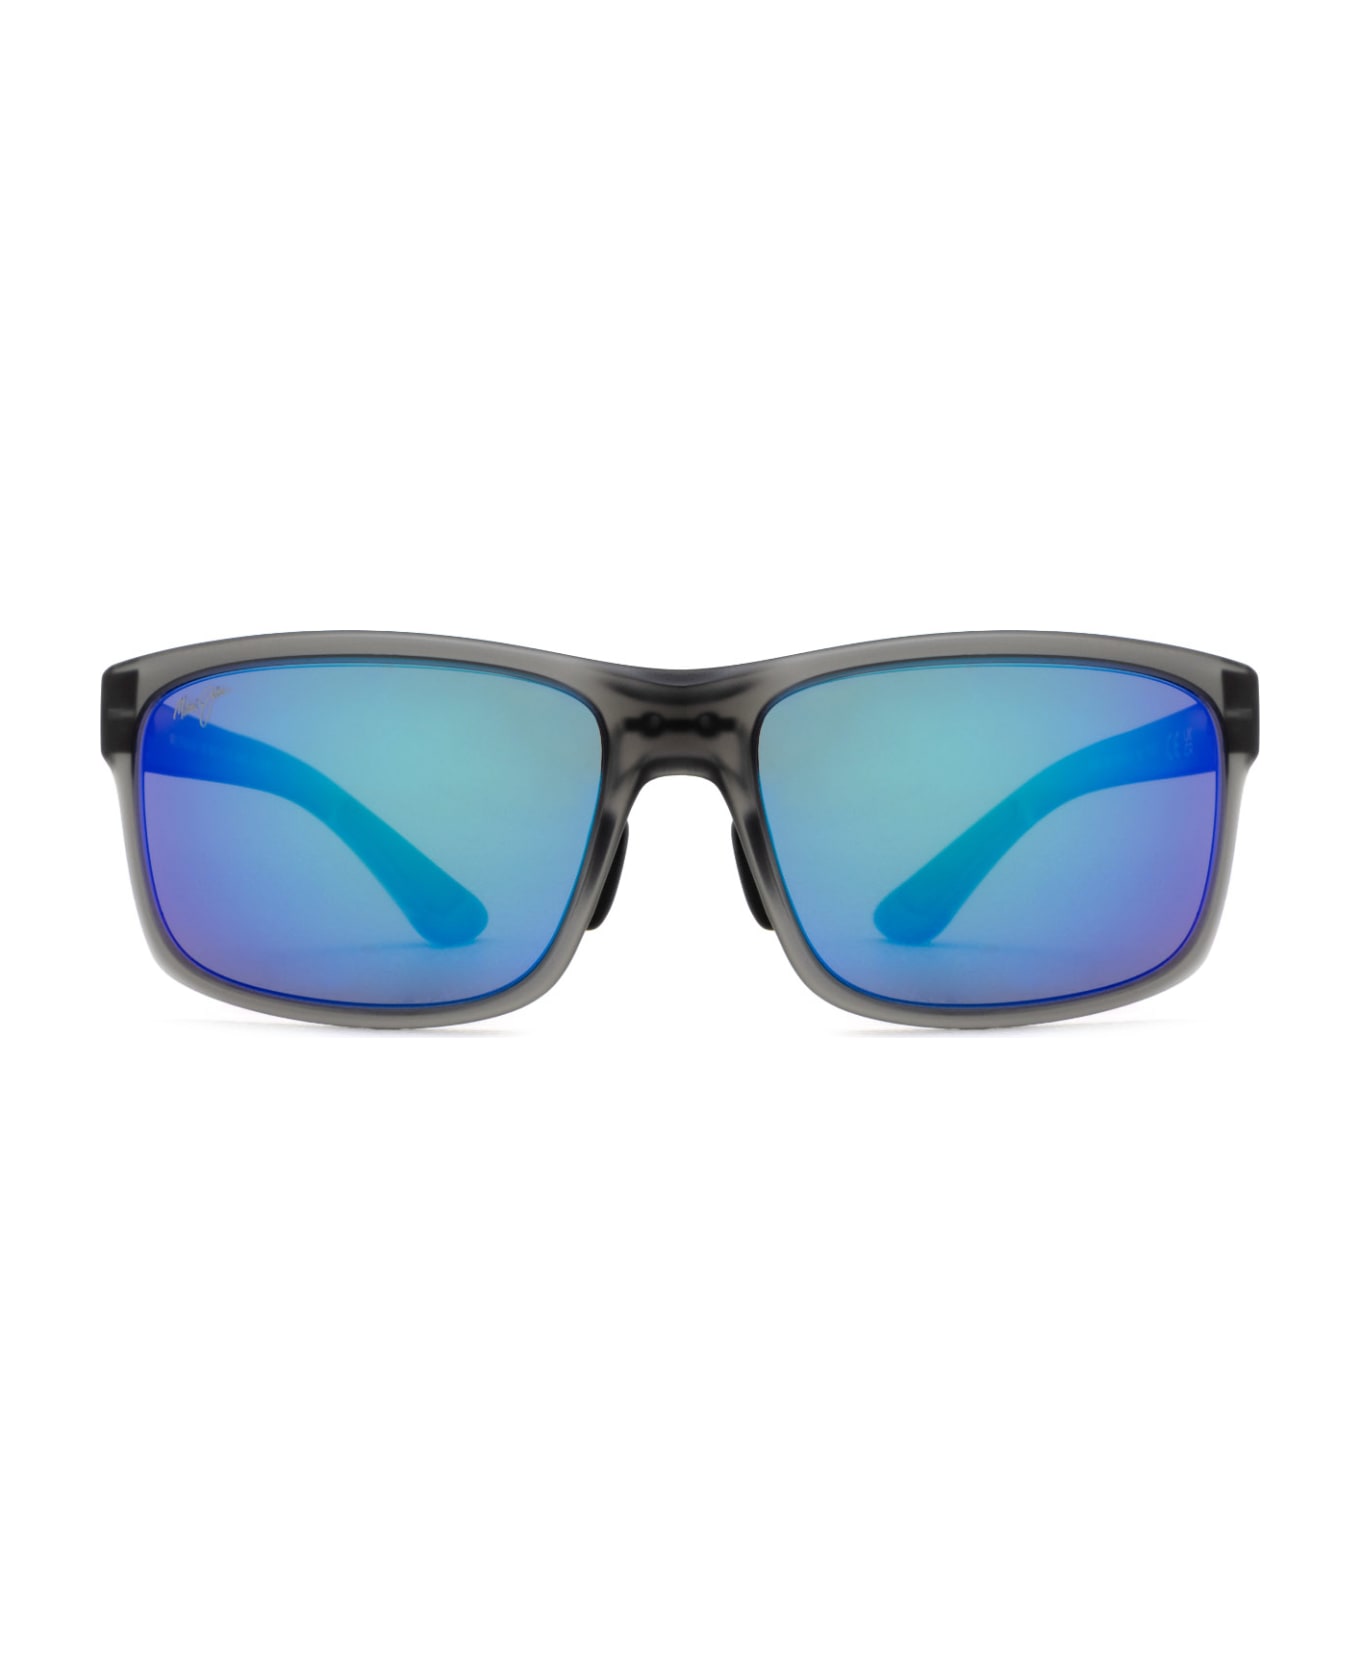 Maui Jim Mj439 Translucent Matte Grey Sunglasses - Translucent Matte Grey サングラス